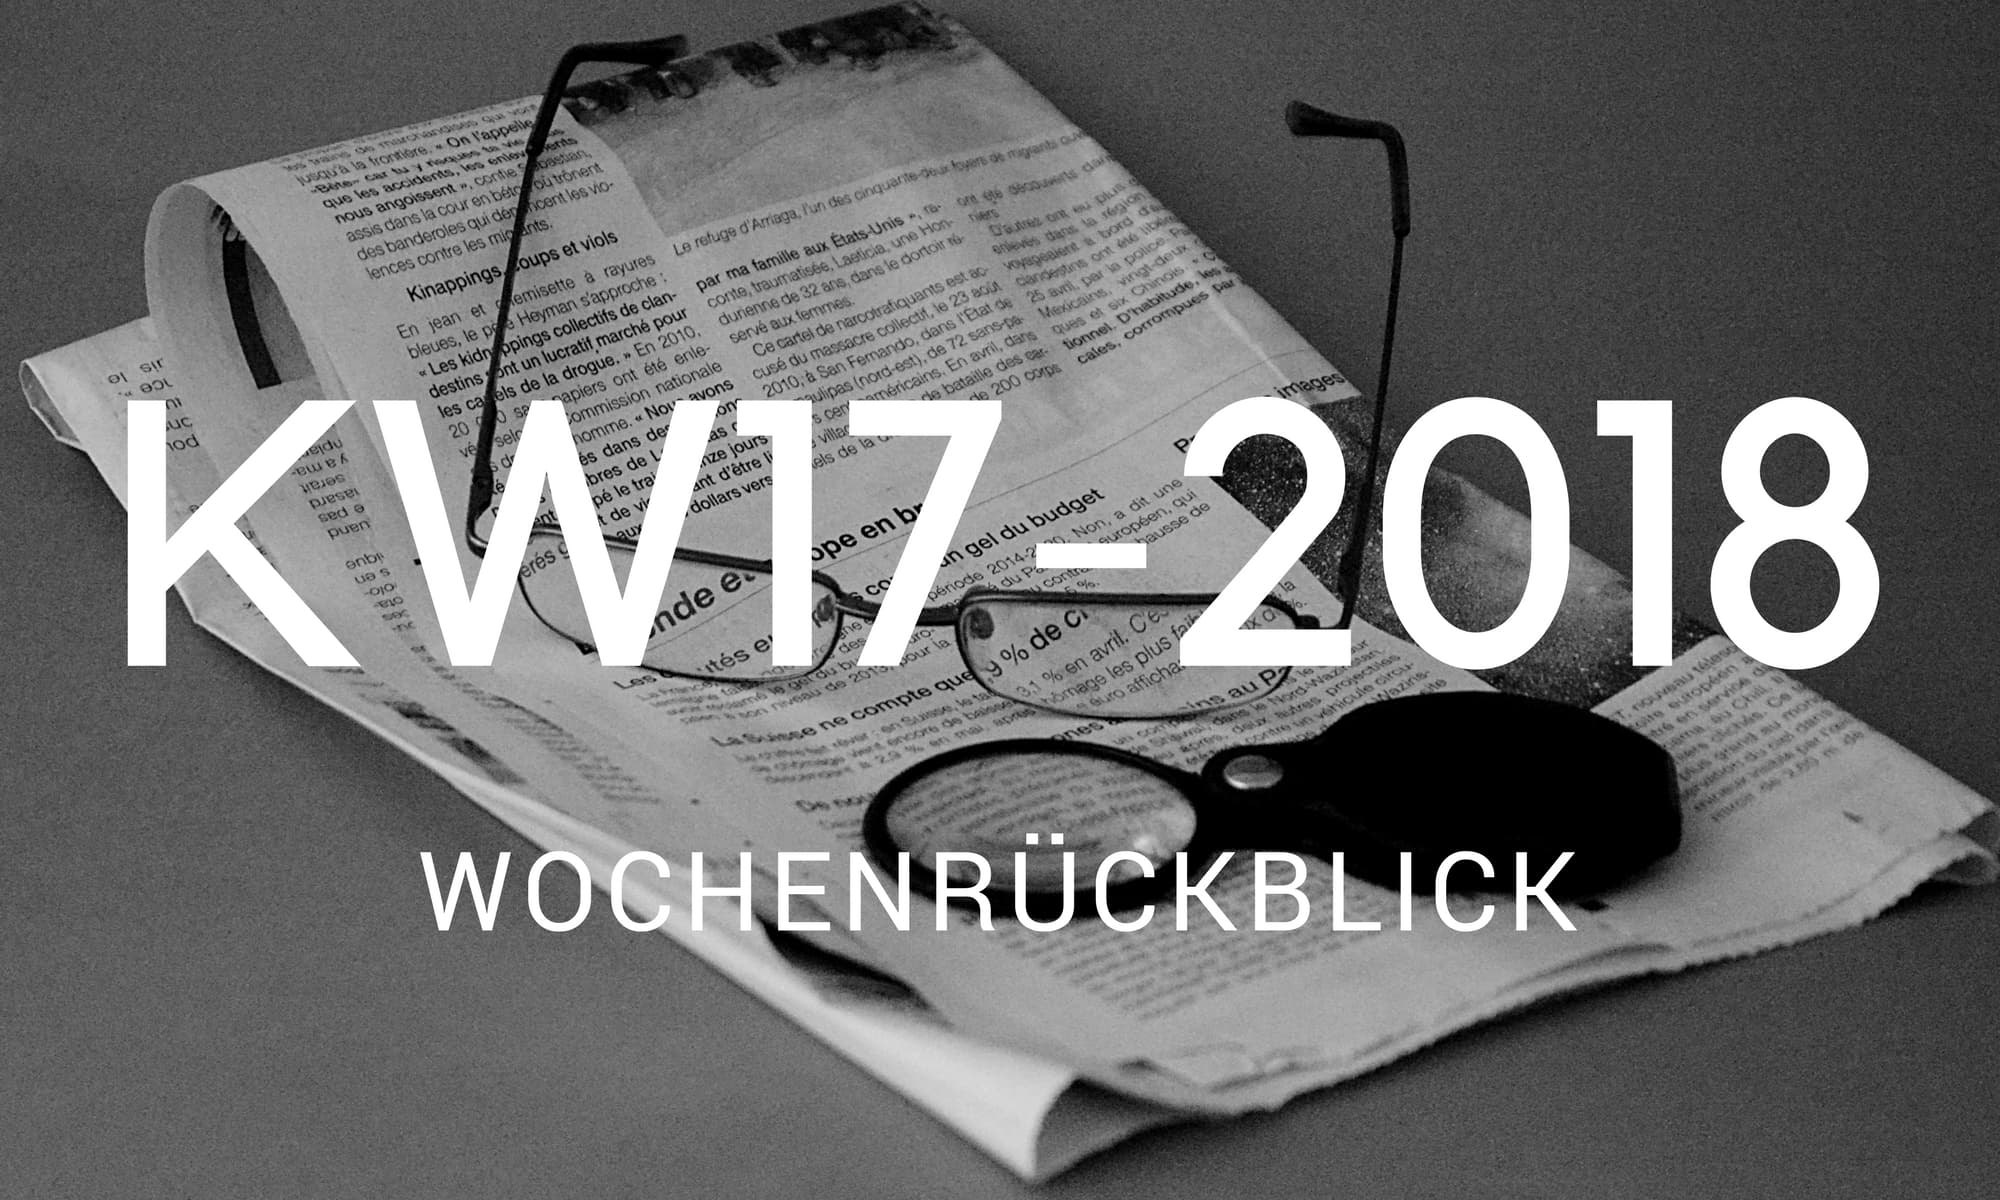 wochenrueckblick camping news KW17 2018